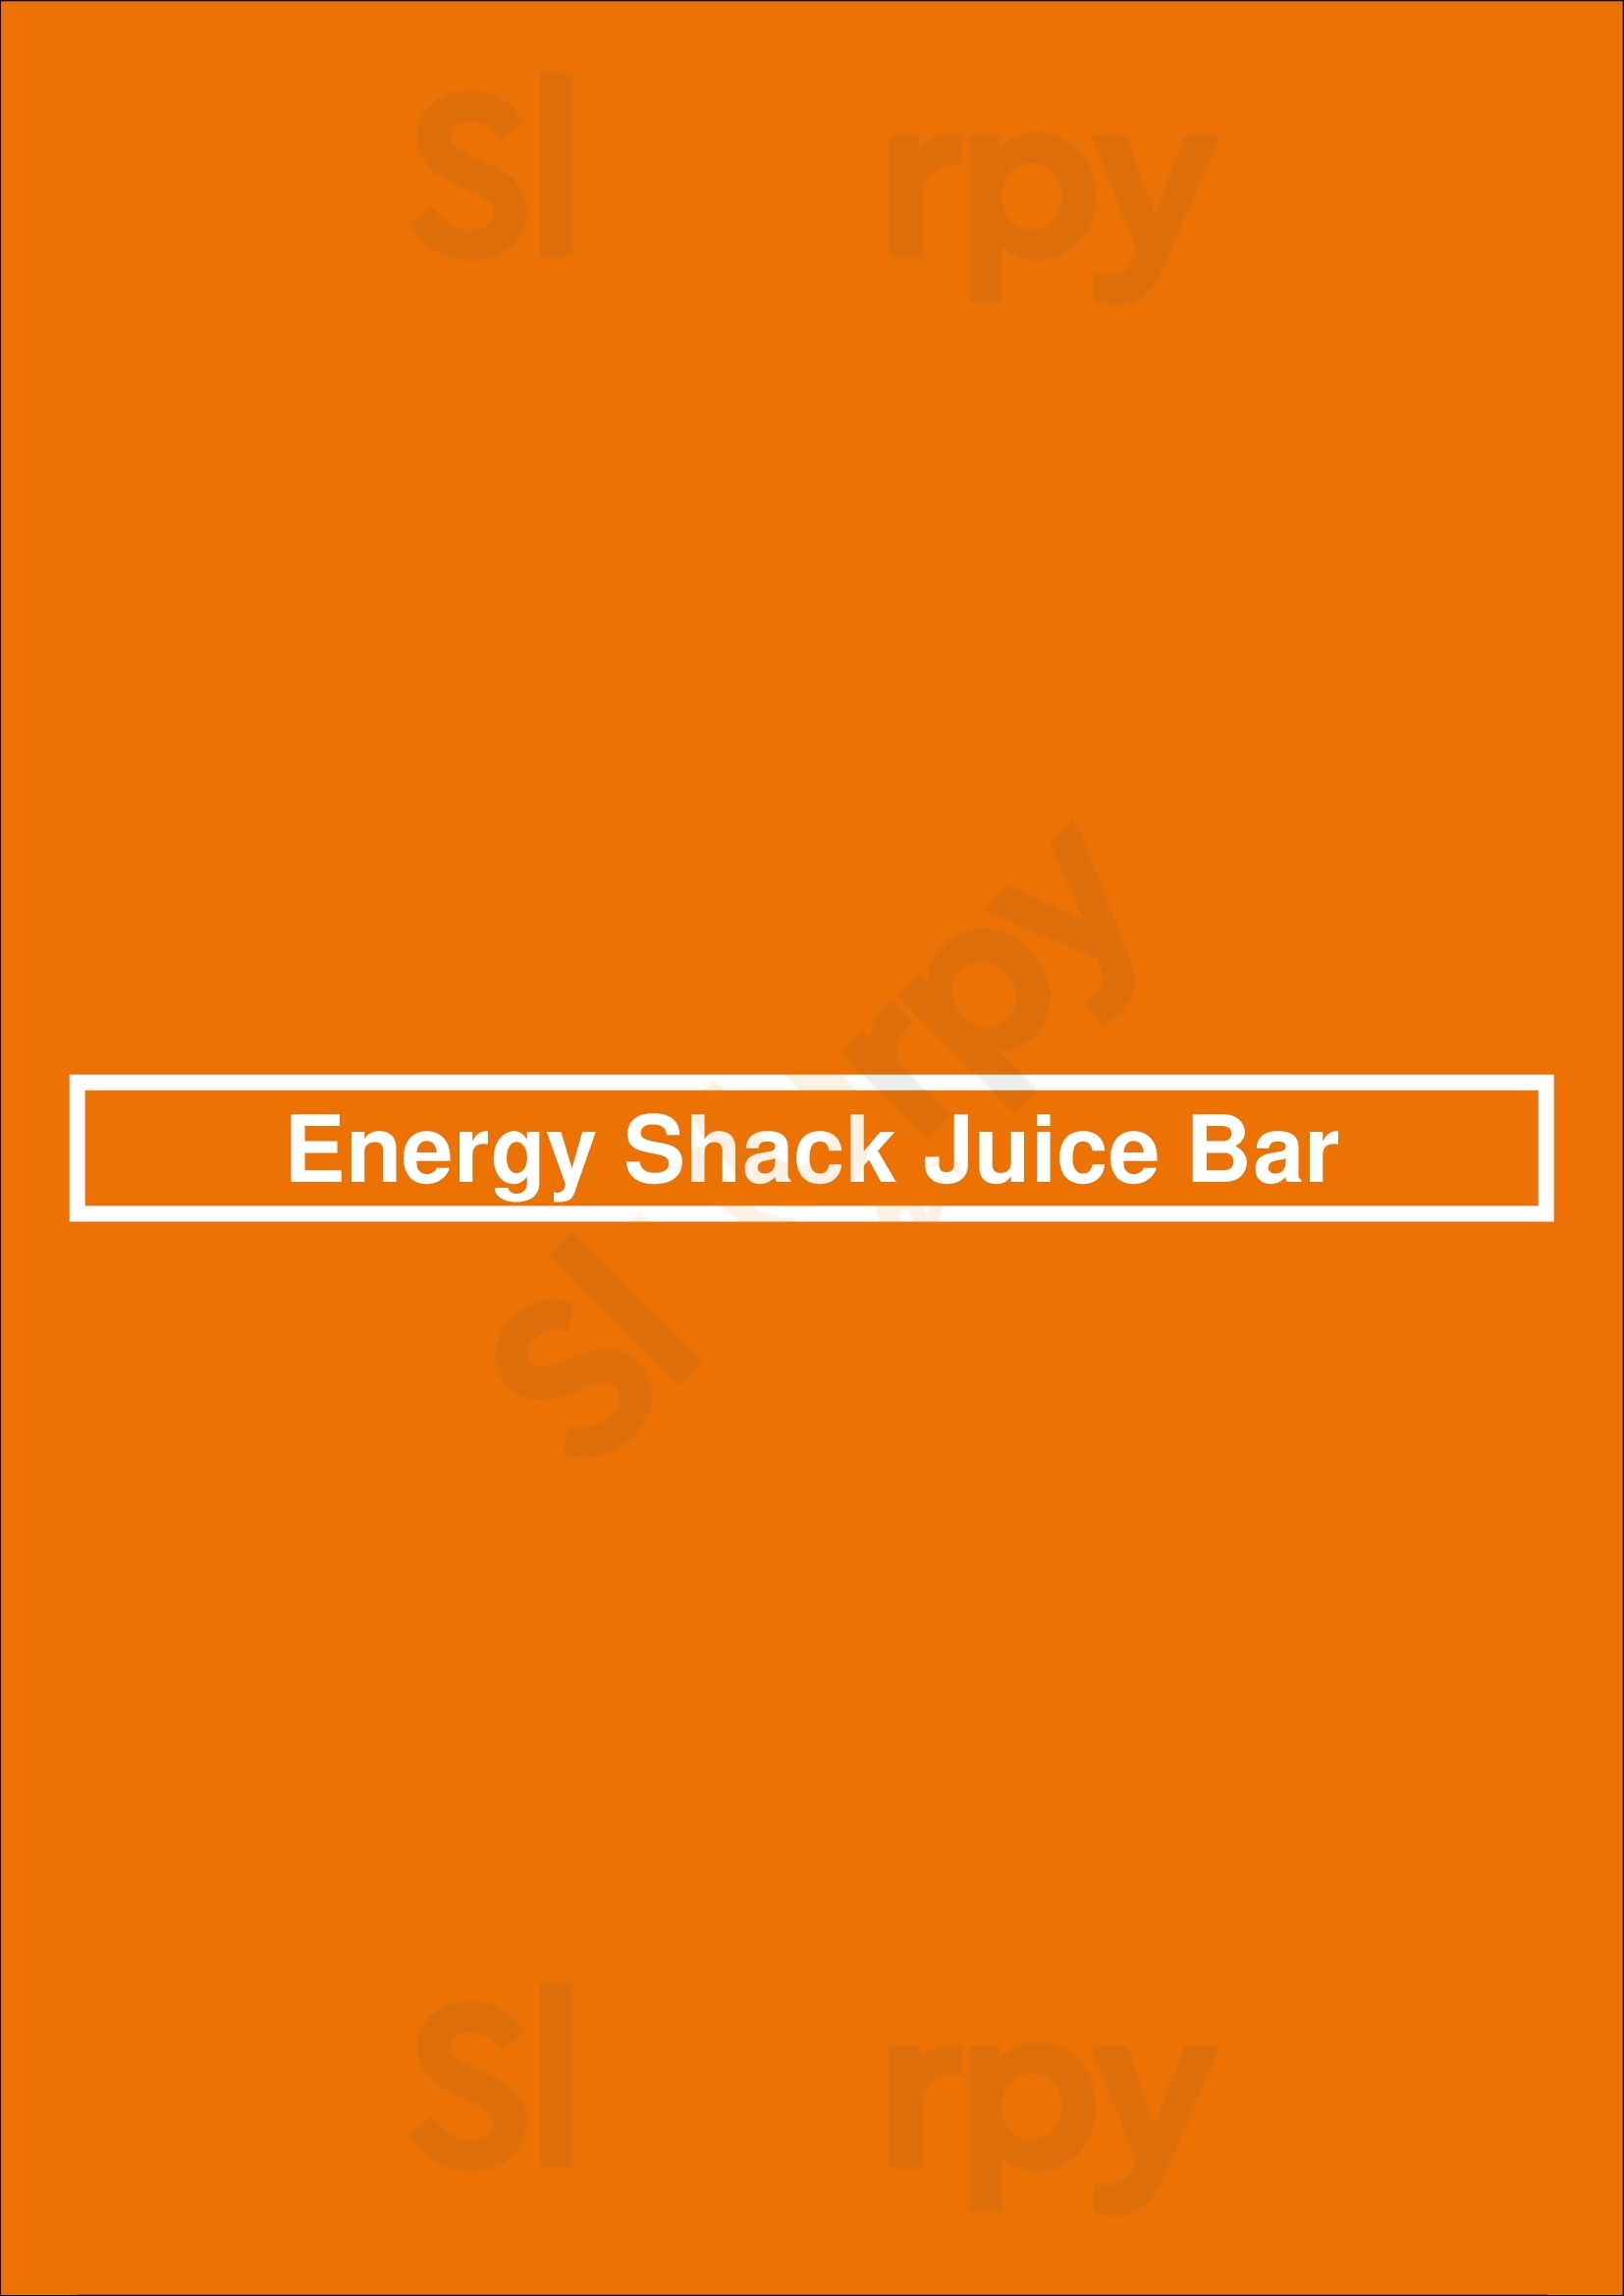 Energy Shack Juice Bar Toronto Menu - 1